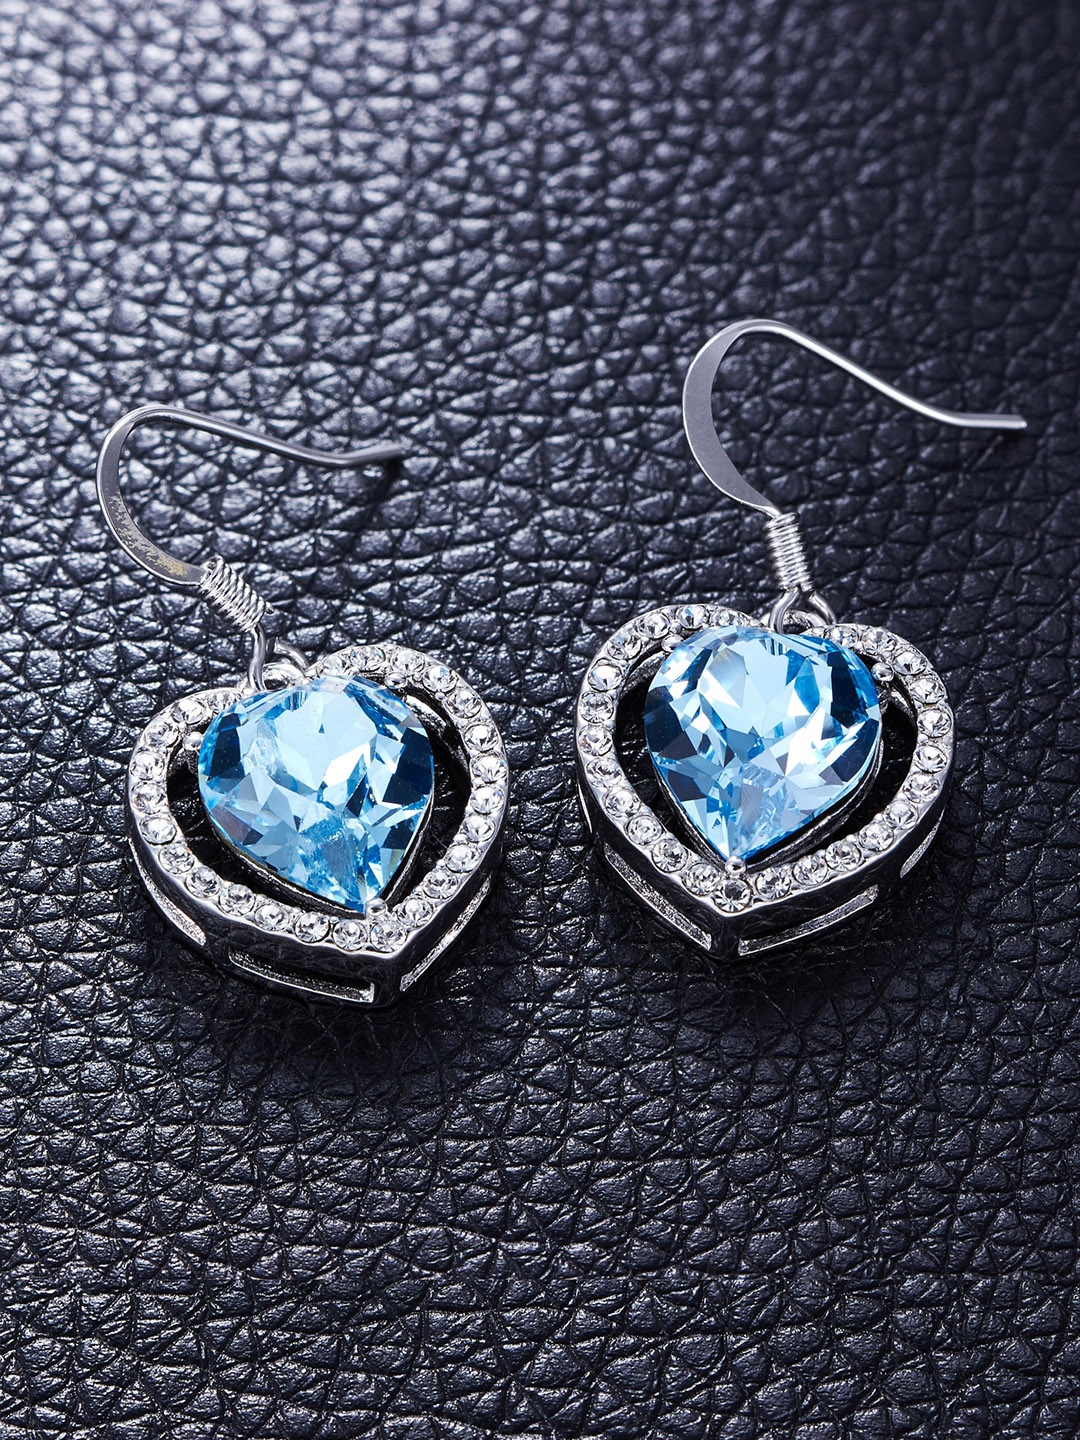 Ted Baker Jewellery Han Swarovski Crystal Heart Earrings Earrings   Tbj16542402  Debenhams